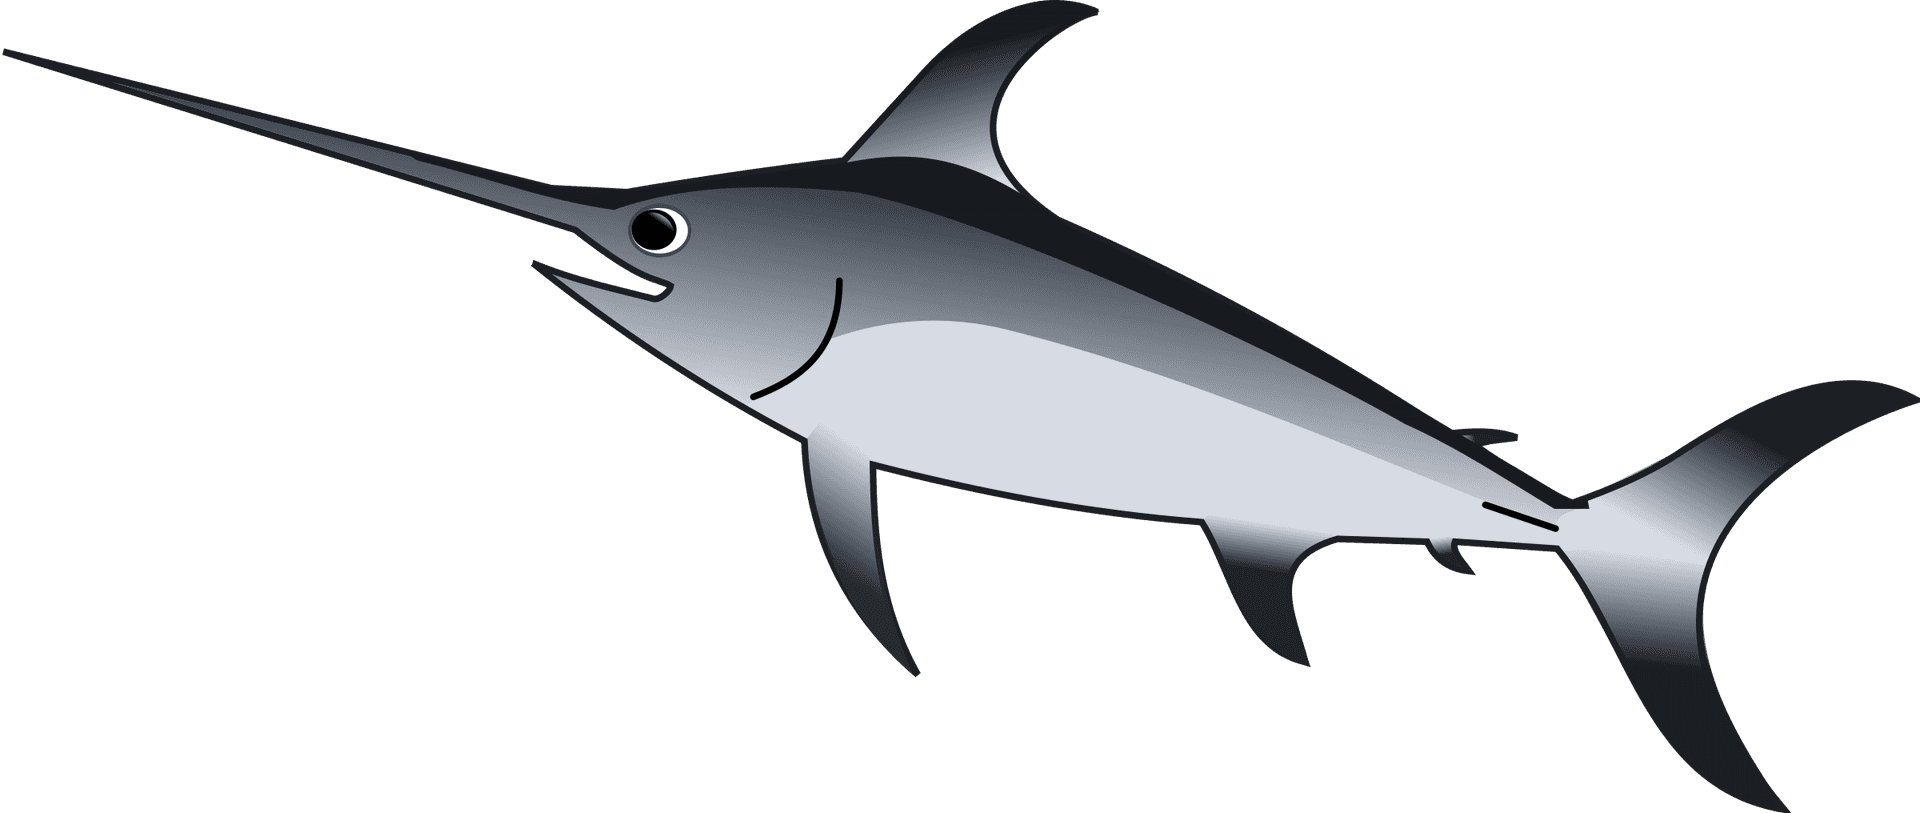 Swordfish Vector Illustration PNG image